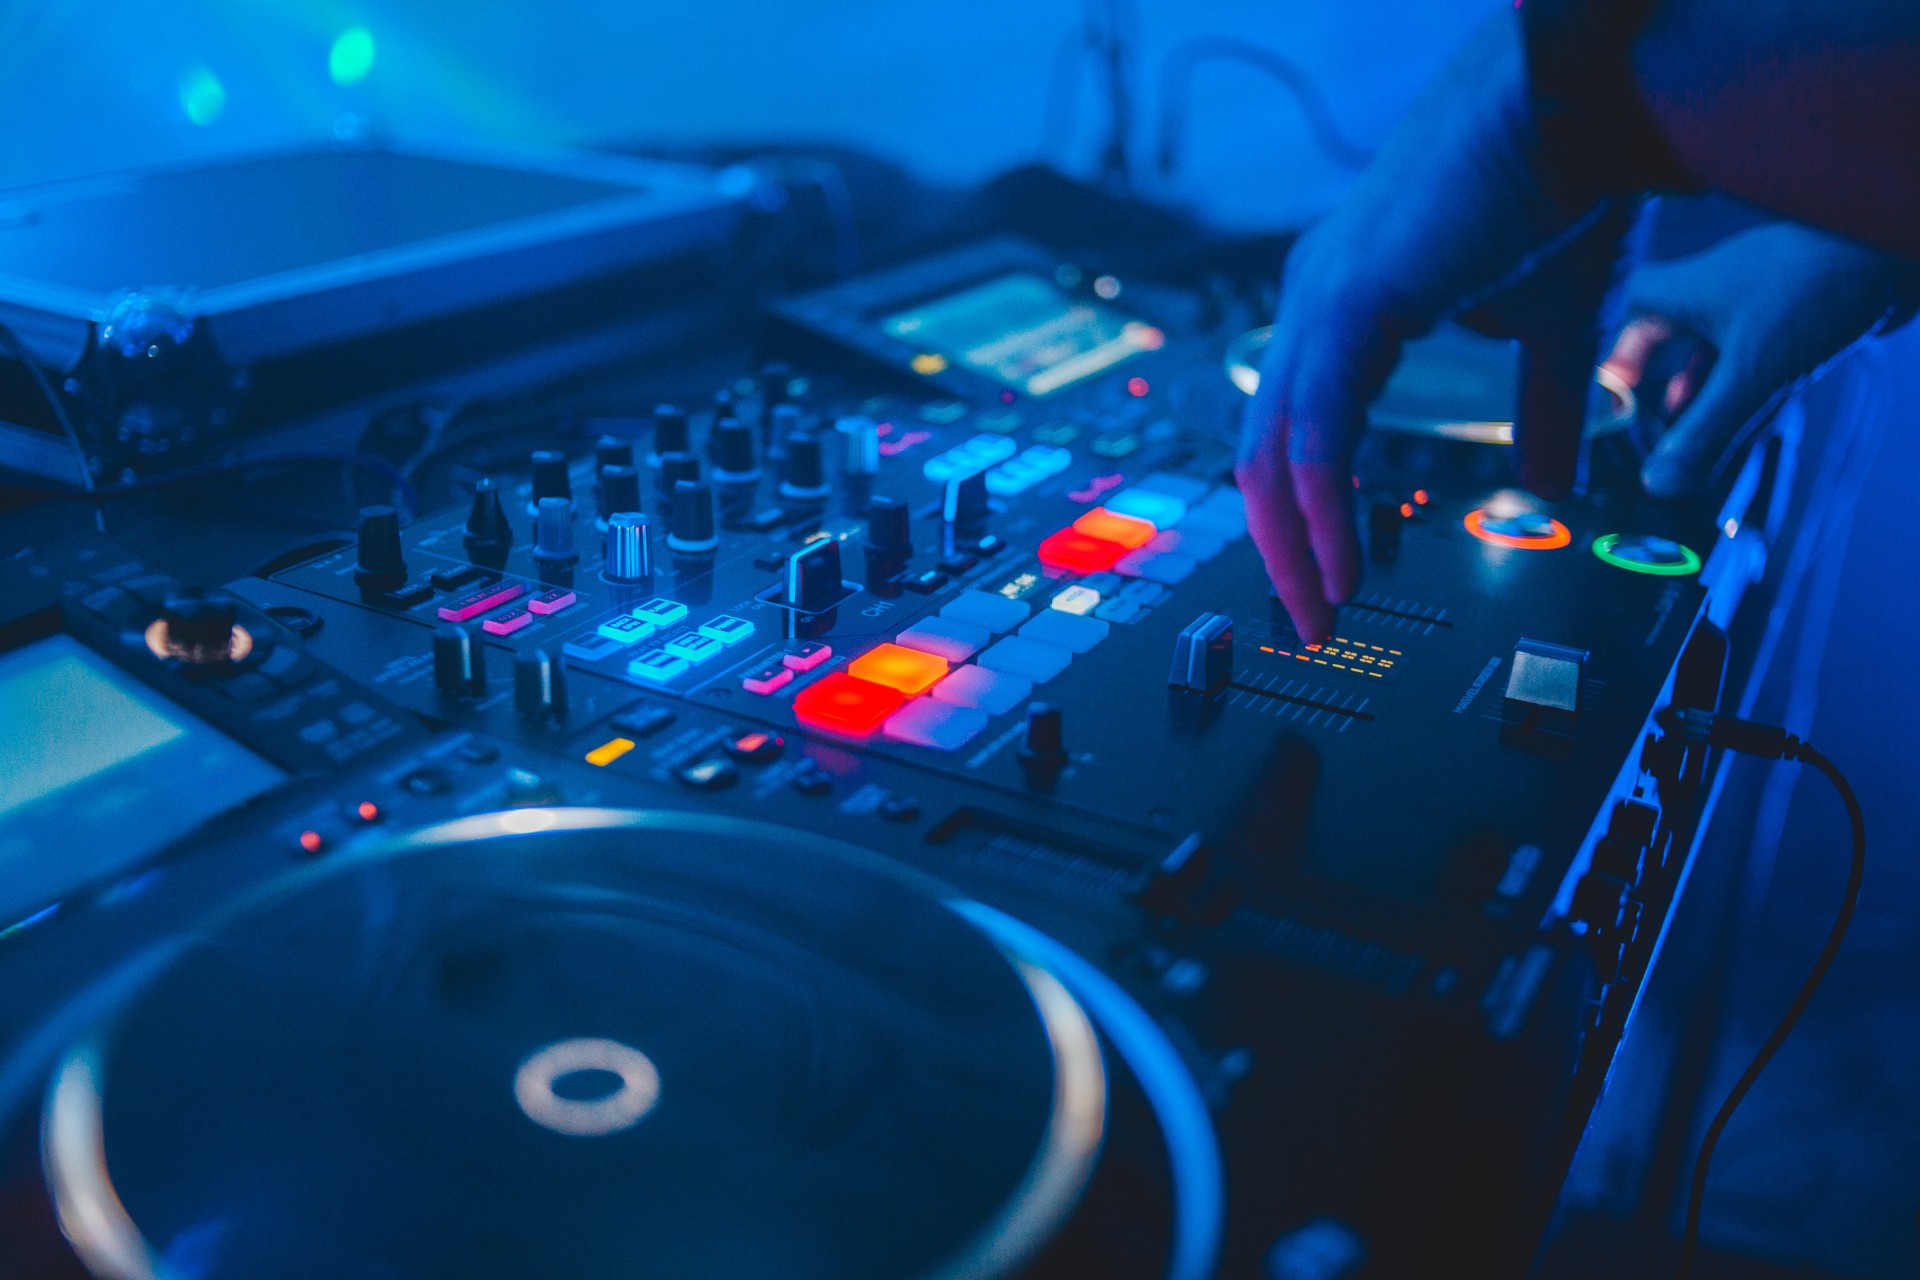 A glowing DJ Mixer. Image: Erik Mclean
